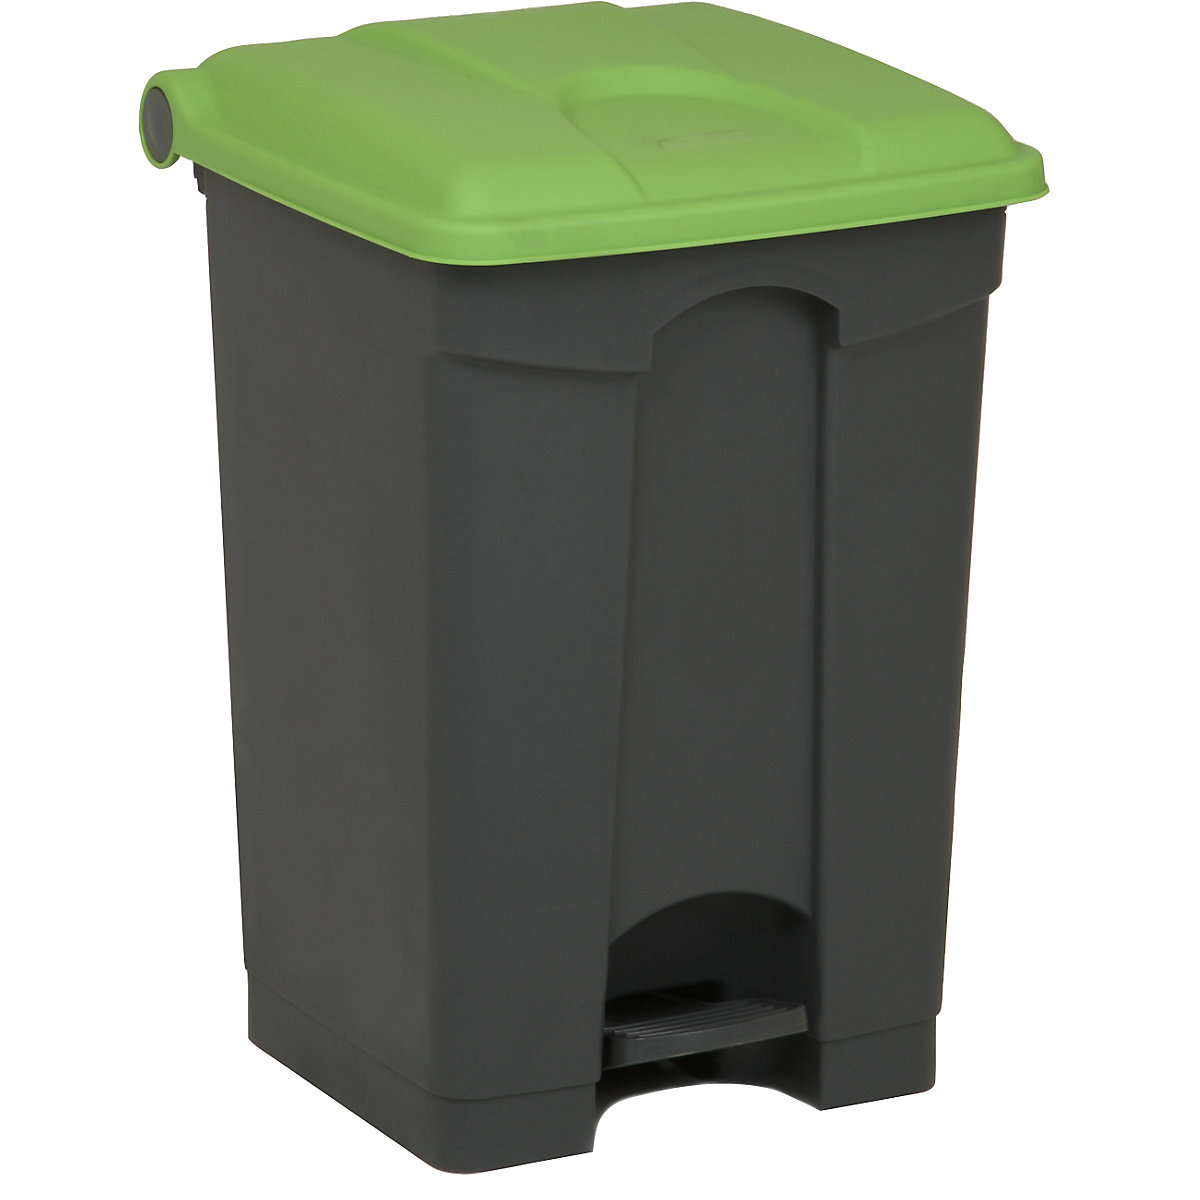 EUROKRAFTbasic – Pedal waste collector, capacity 45 l, WxHxD 410 x 600 x 400 mm, grey, green lid